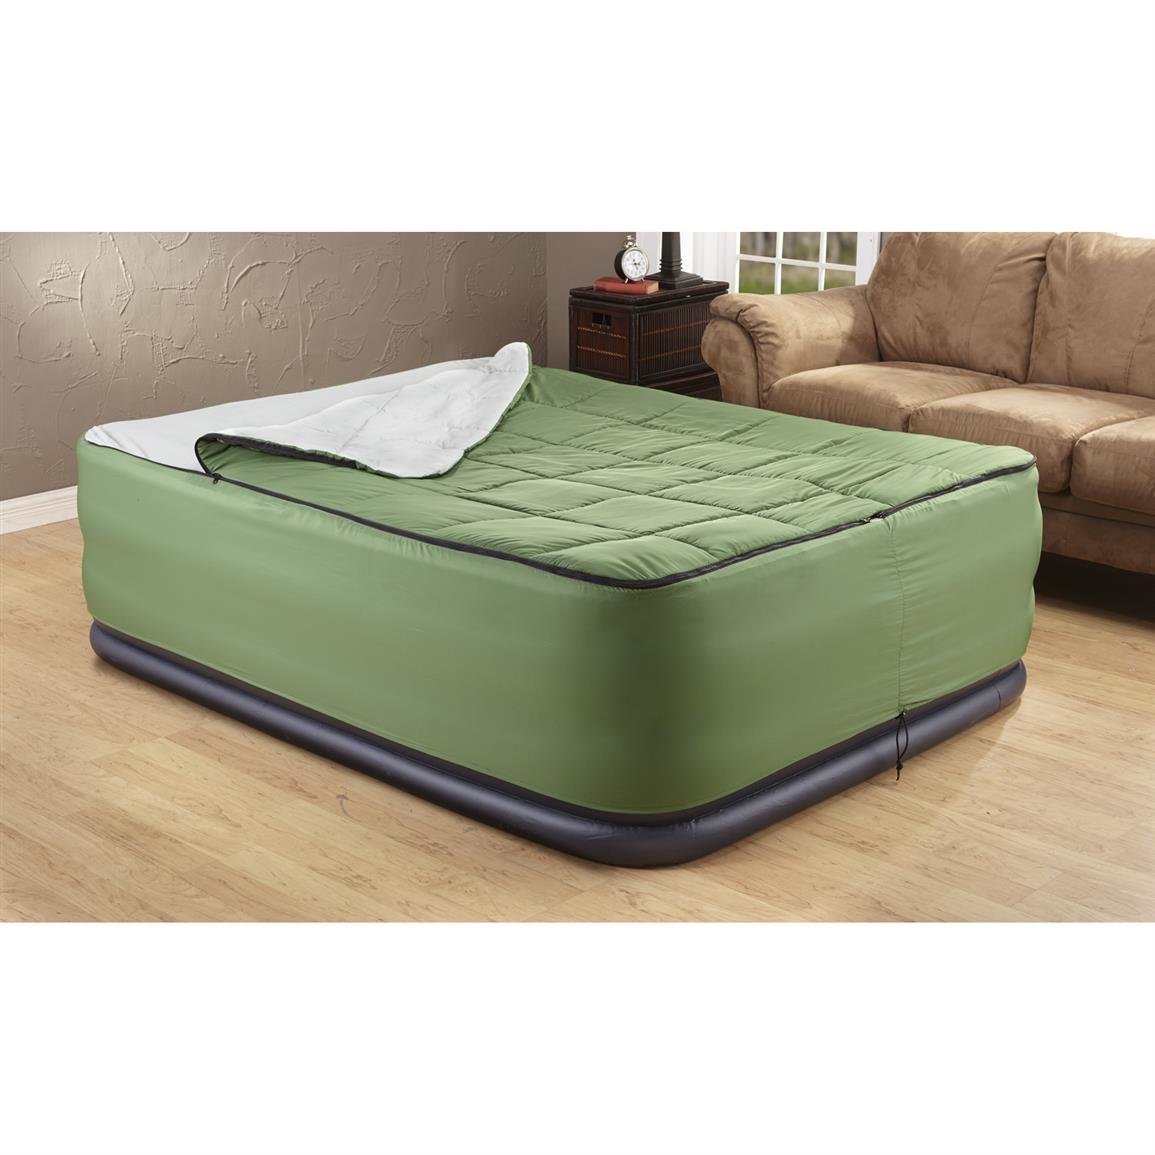 air mattress costco australia